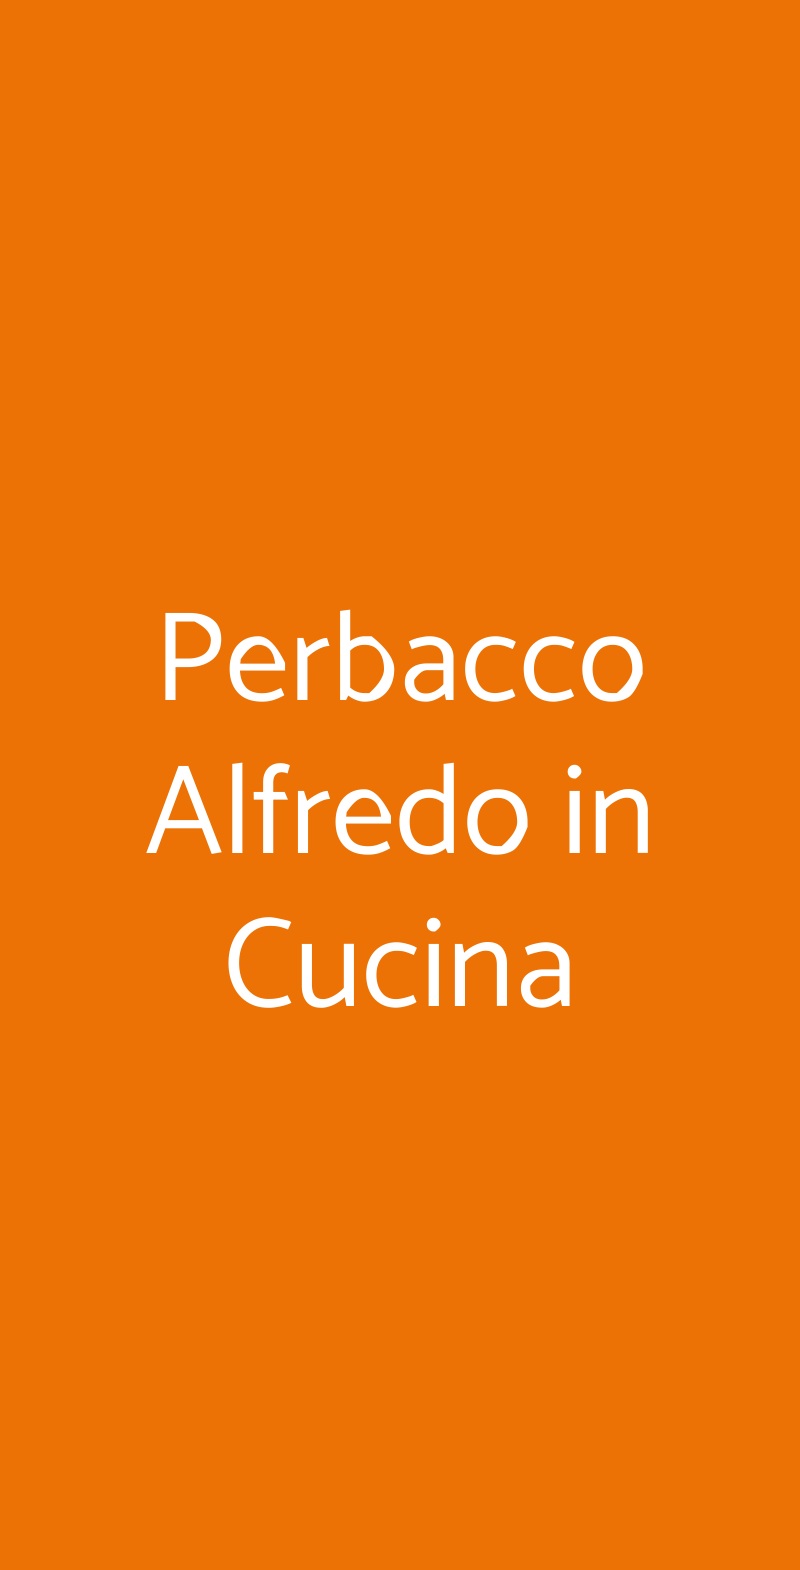 Perbacco Alfredo in Cucina Torino menù 1 pagina